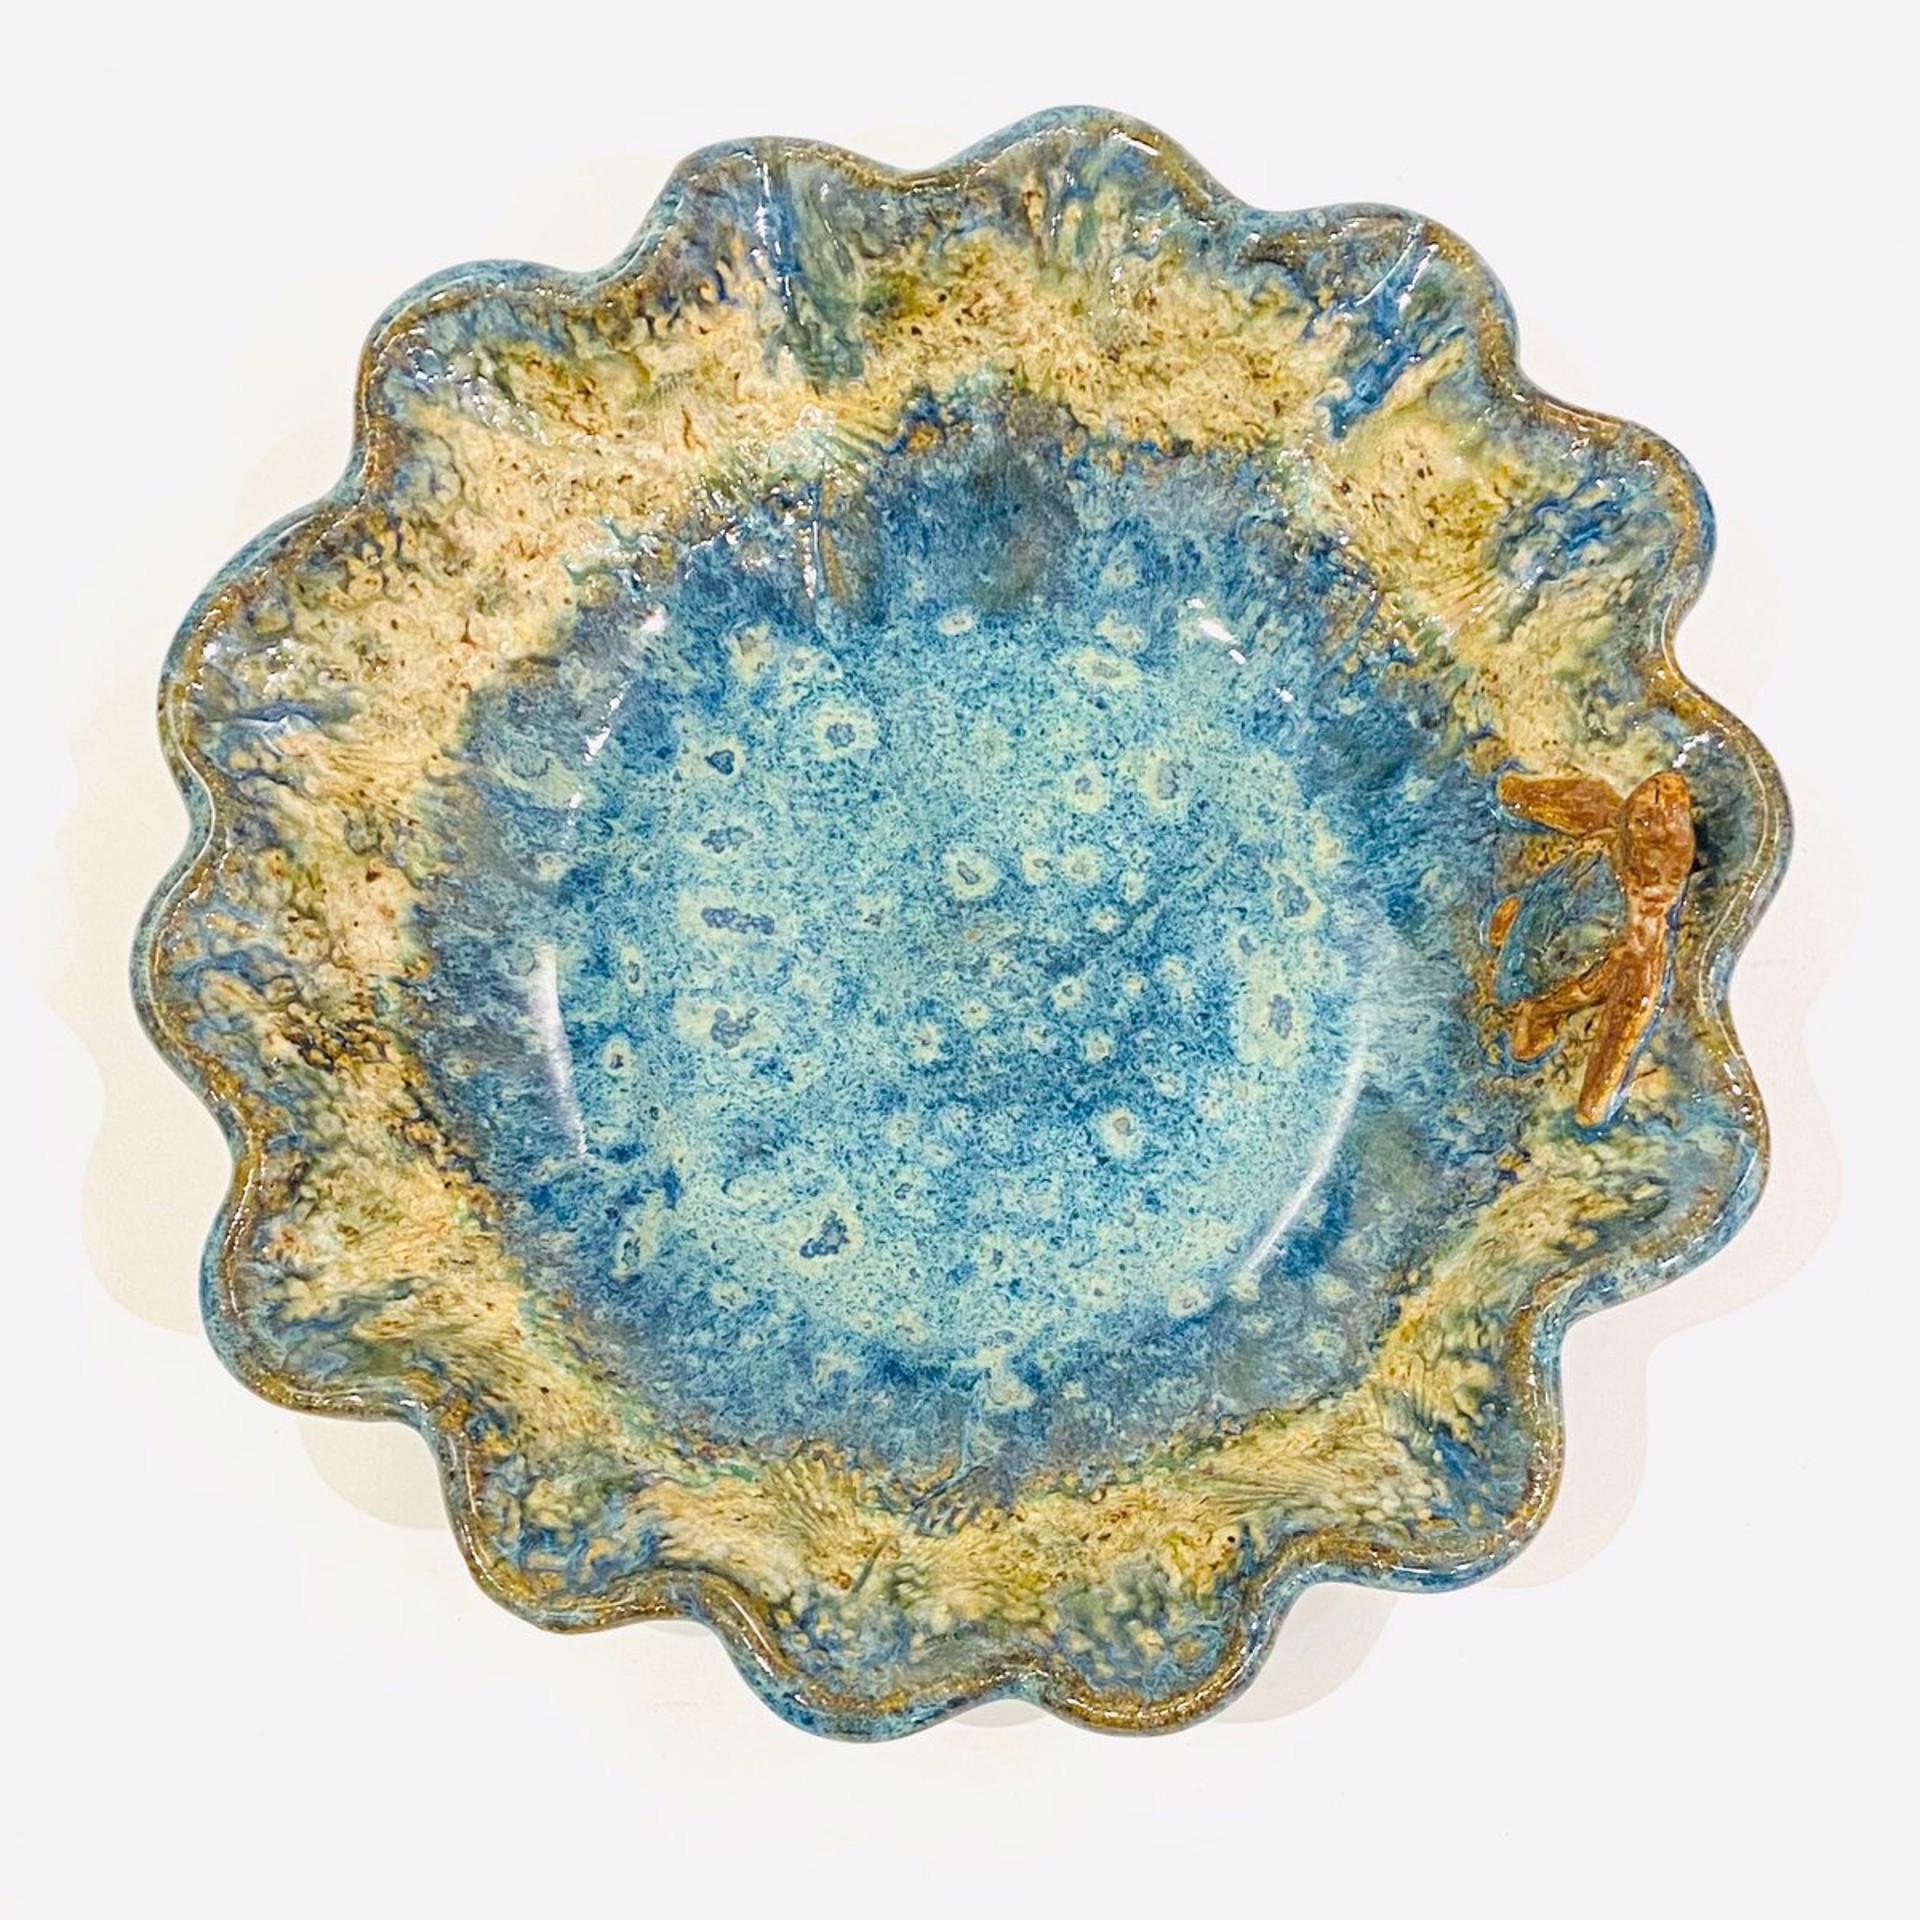 LG22-898 Medium Round Scalloped Bowl with Turtle (Blue Glaze) by Jim & Steffi Logan